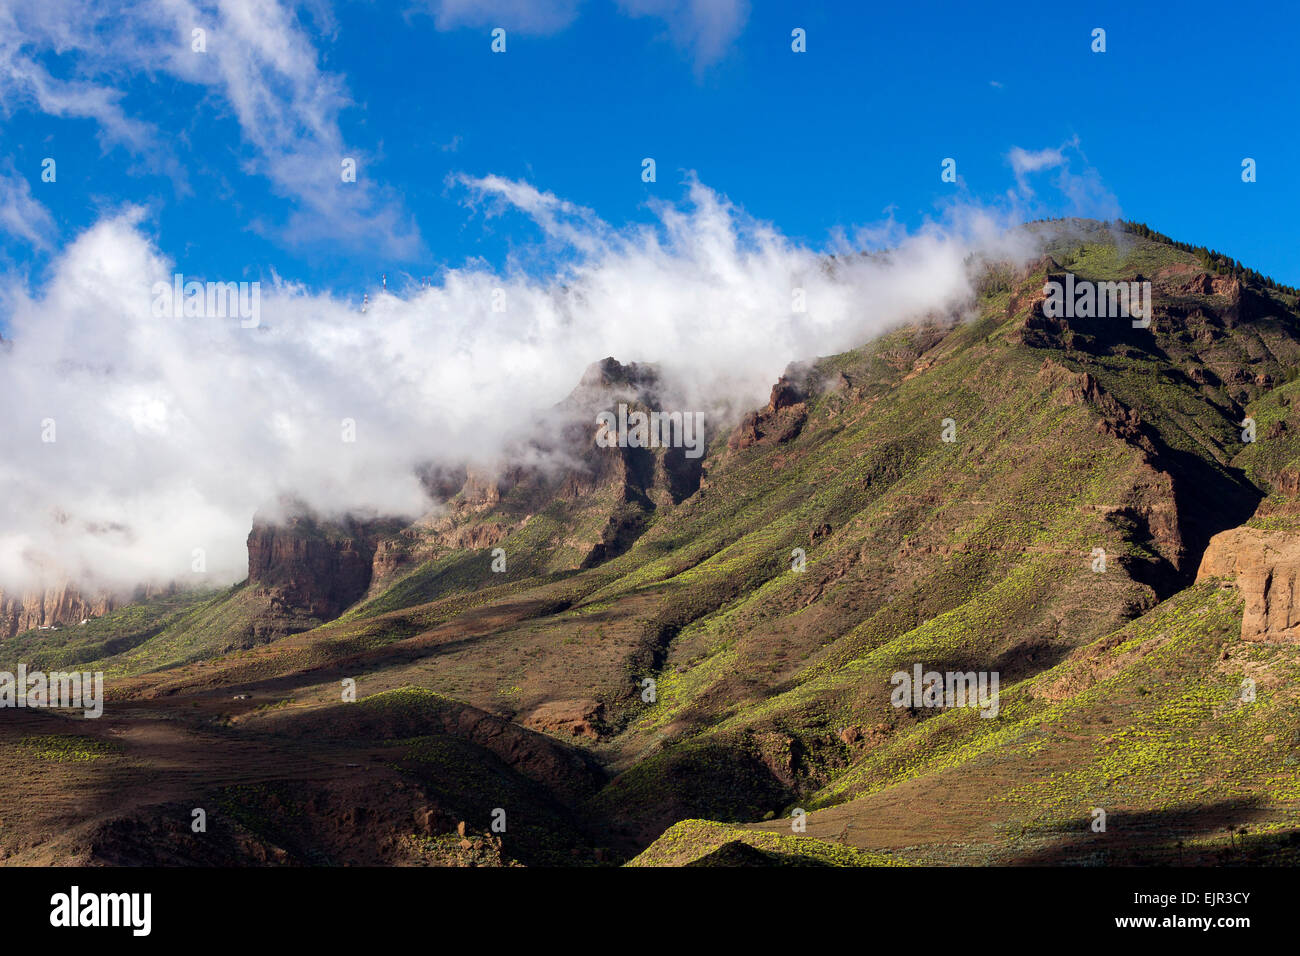 Wispy clouds over a mountain ridge, Santa Lucia de Tirajana, Gran Canaria, Canary Islands, Spain Stock Photo